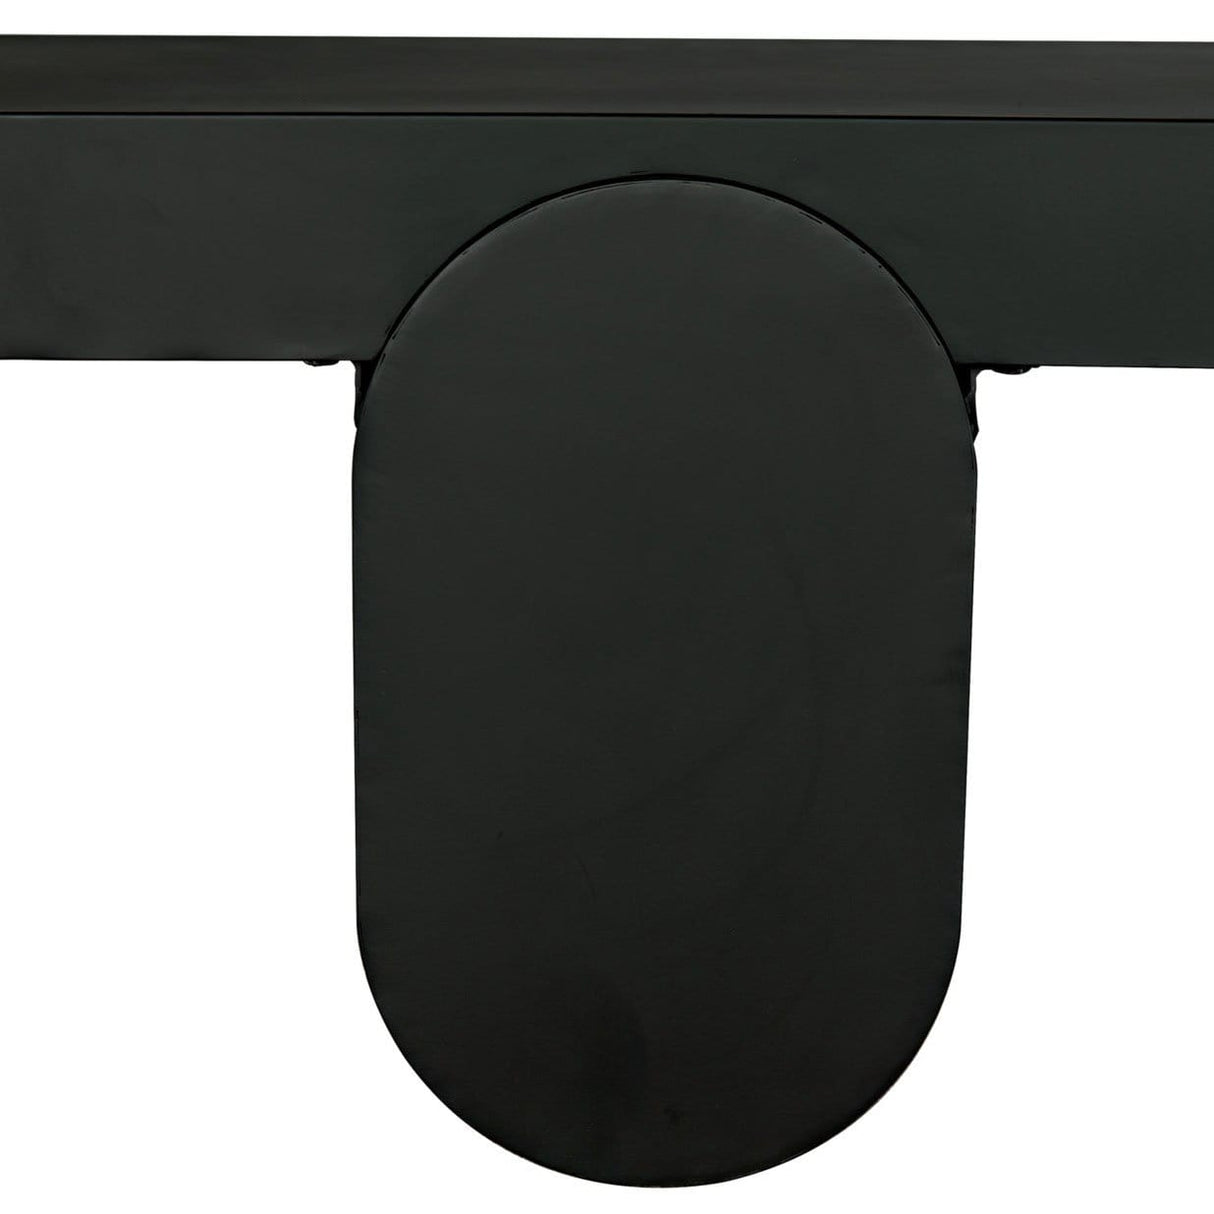 Noir Evora Coffee Table - HOLD FOR PRICING Furniture noir-GTAB1108MTB